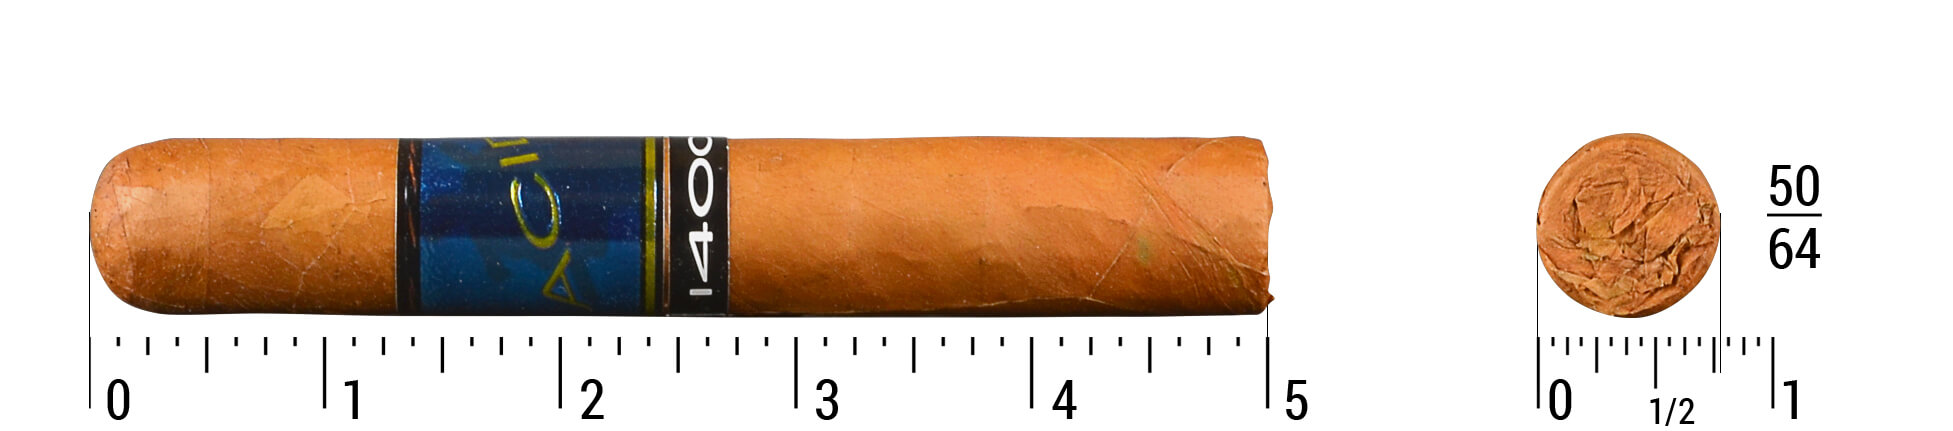 Acid Deep Dish Single Cigar Size